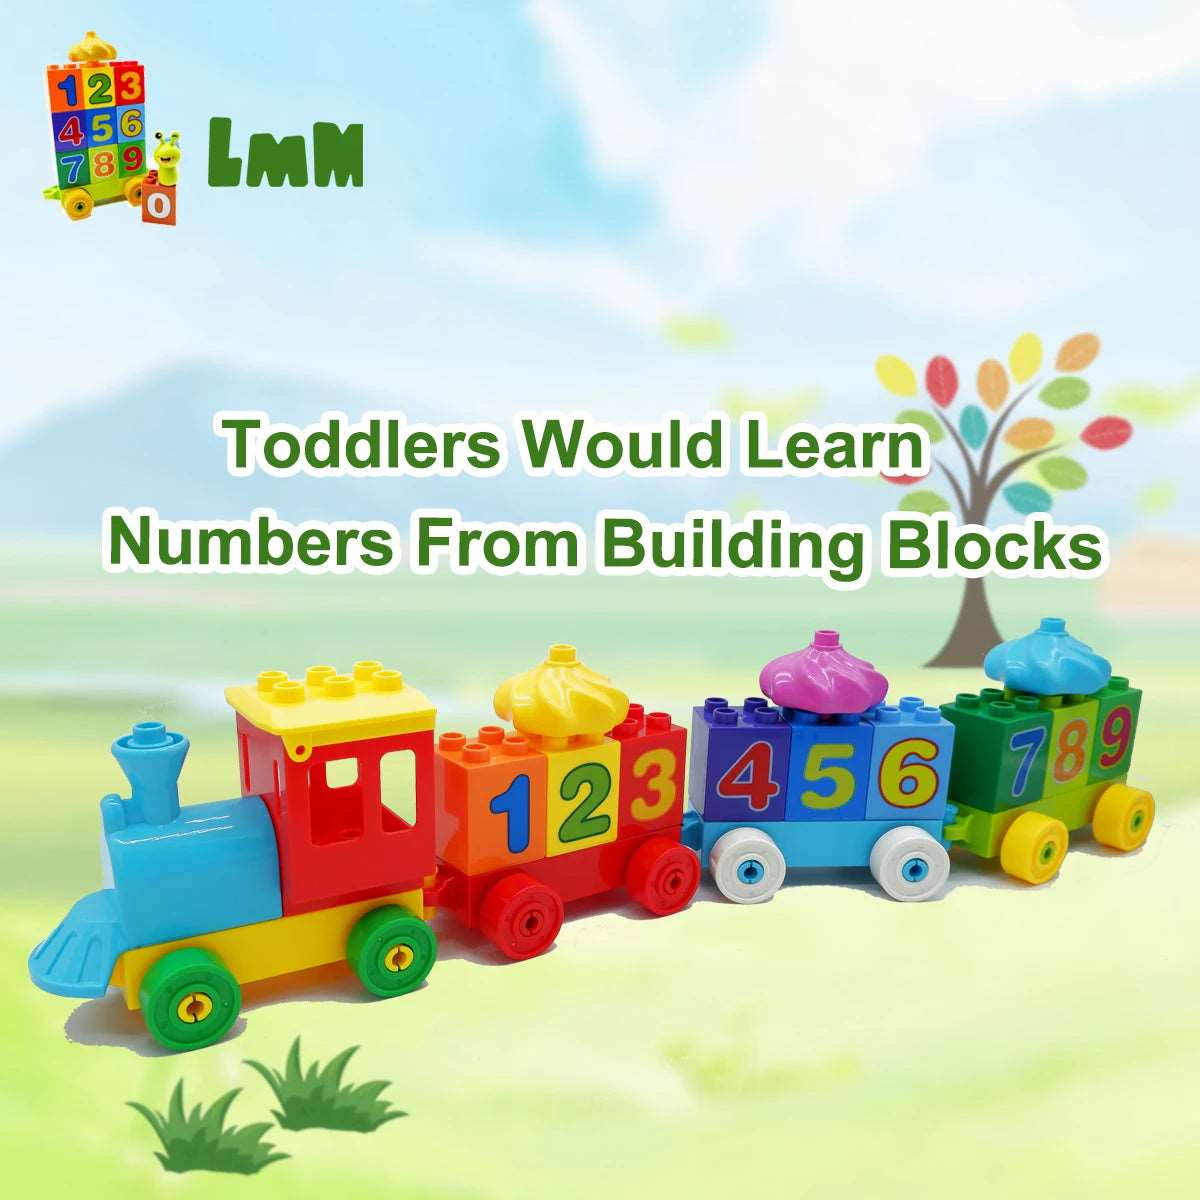 Big Size Building Blocks Set for Toddlers - Educational & Fun